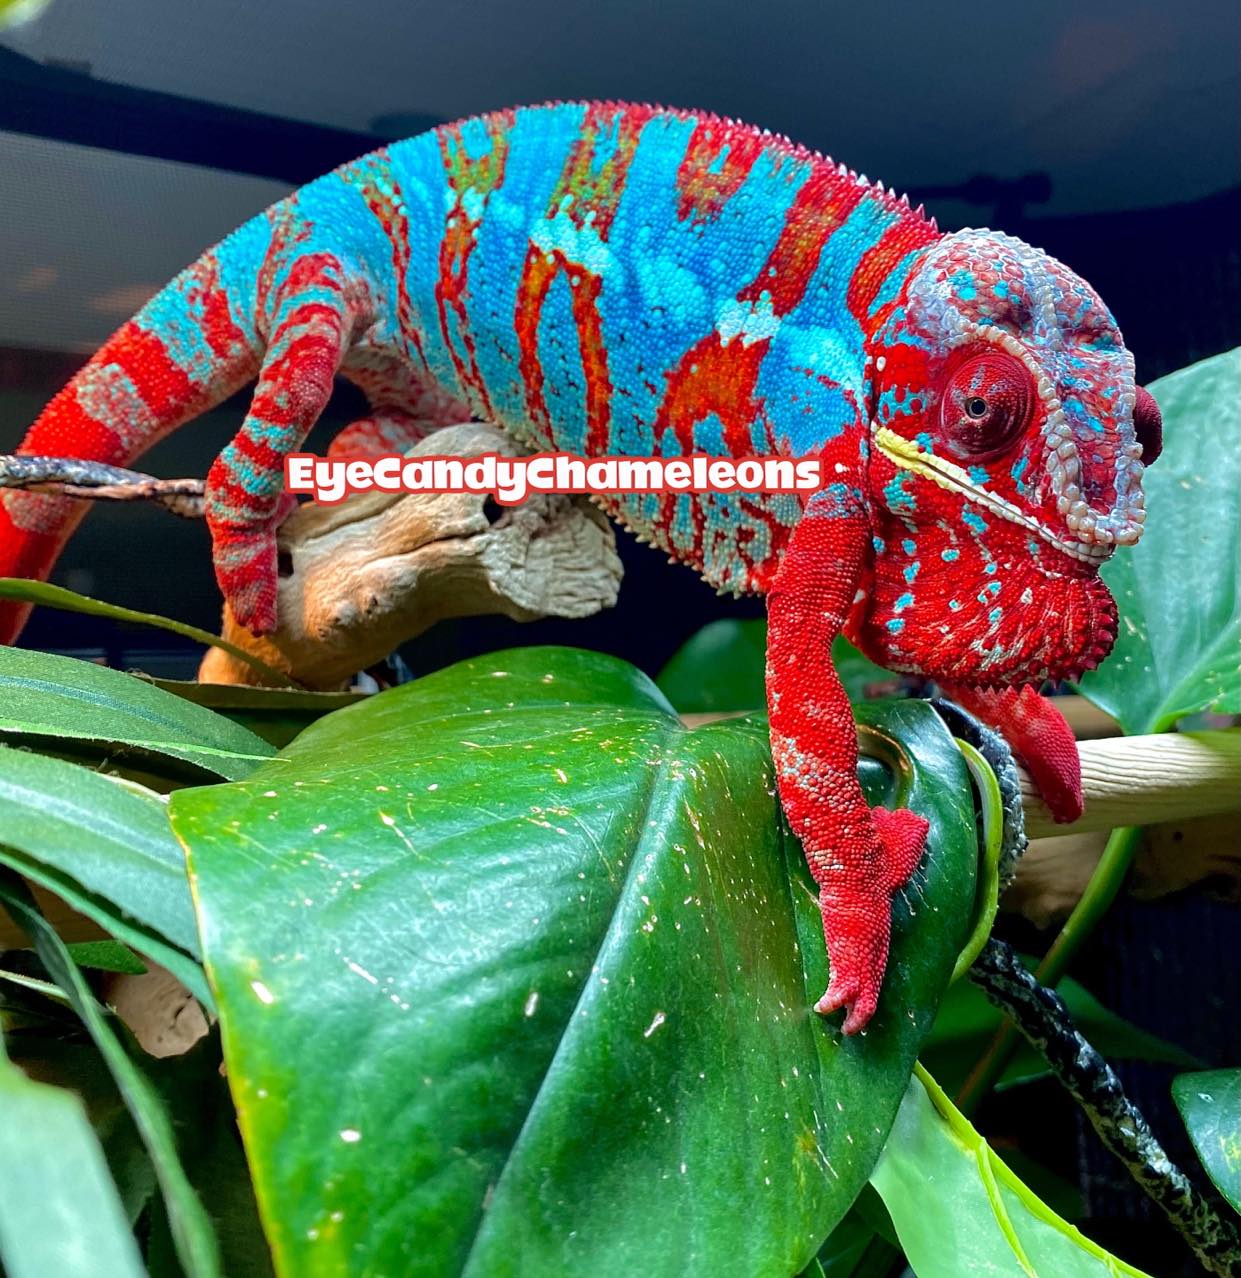 Lineage: Eye Candy Chameleons | Panther Chameleon